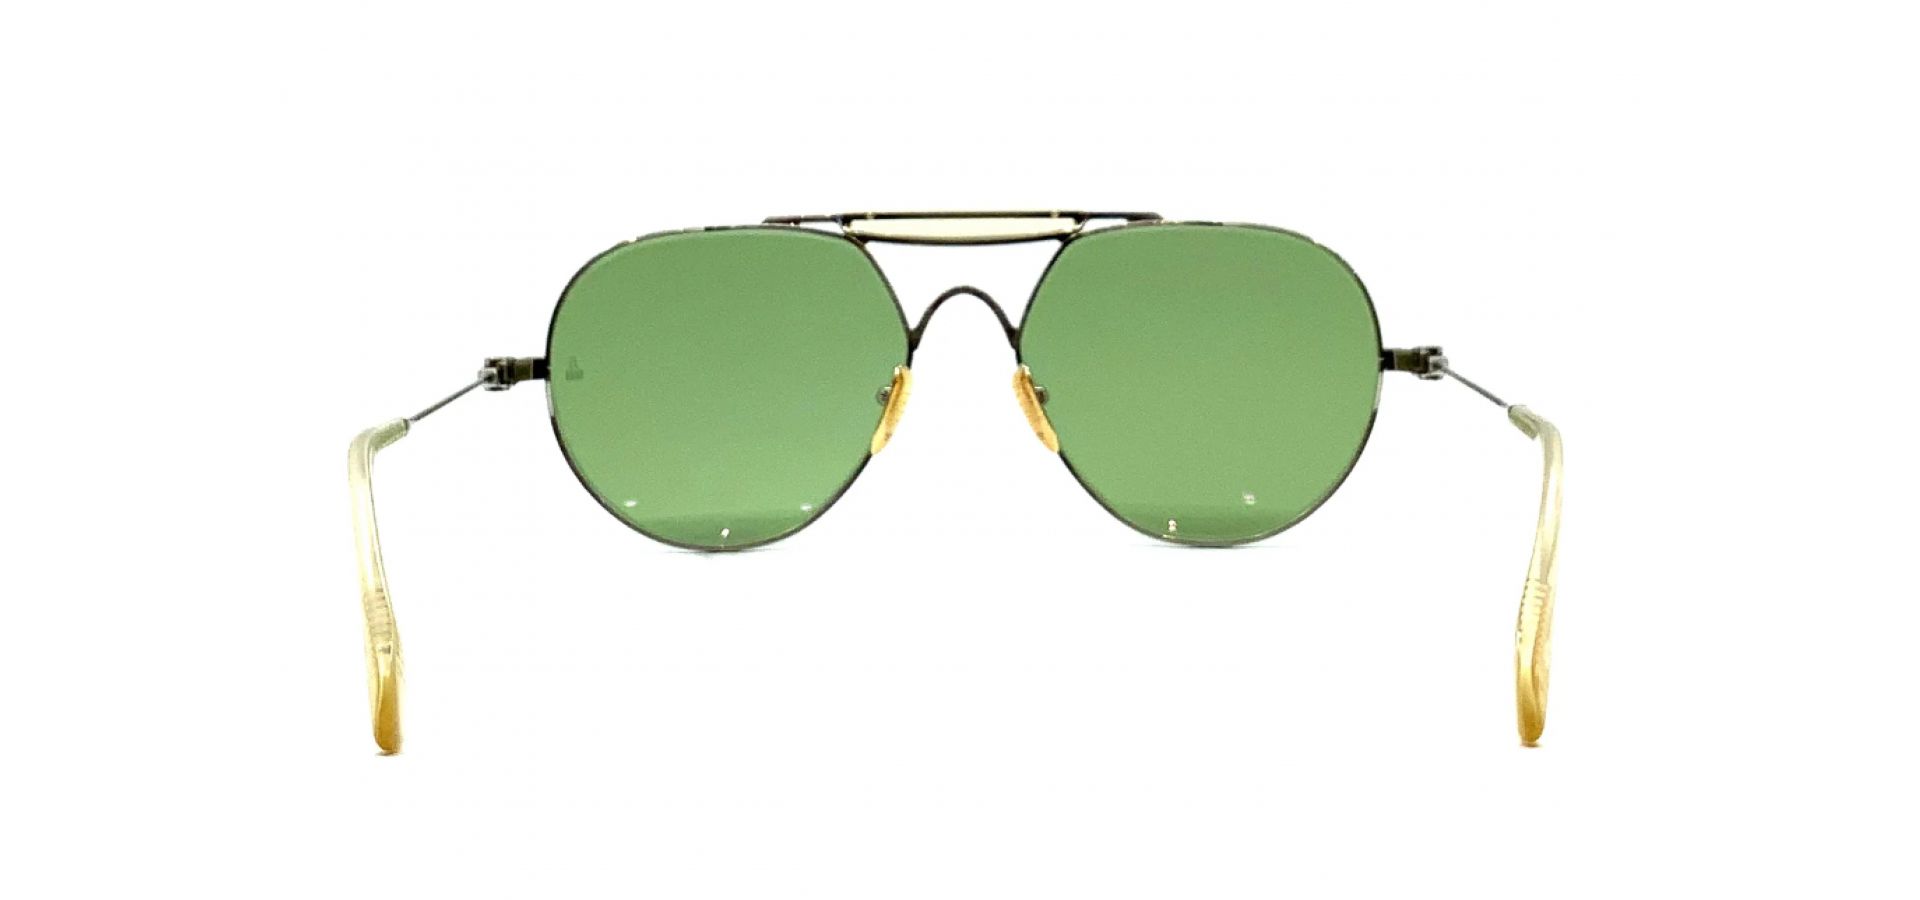 Sončna očala Jacques Marie Mage BASTOGNE ANTIQUE LGHT GREEN: Spol: unisex, Material: titan